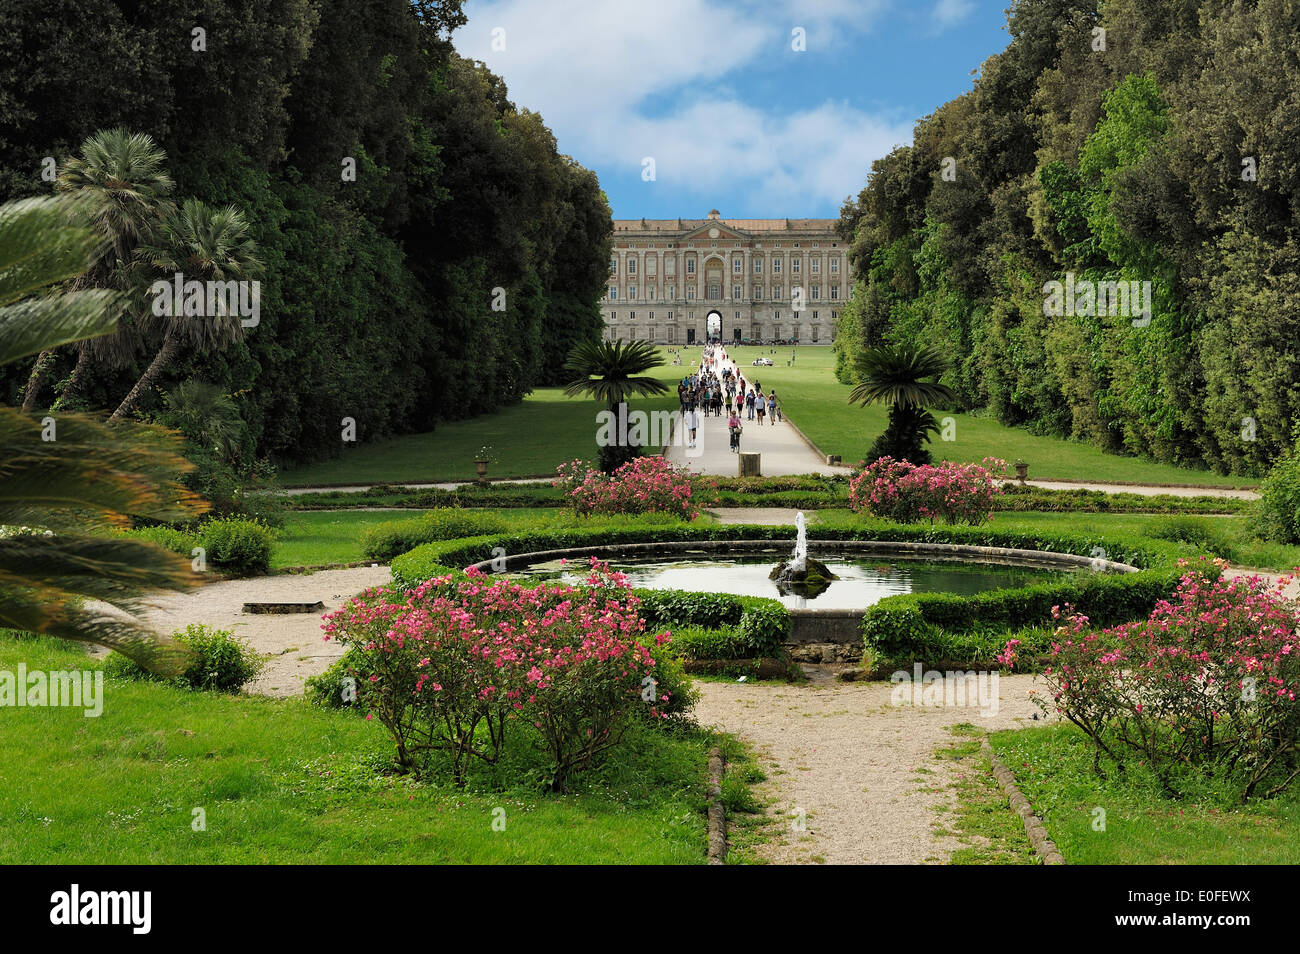 garden of the royal residence of Caserta, Italy Stock Photo